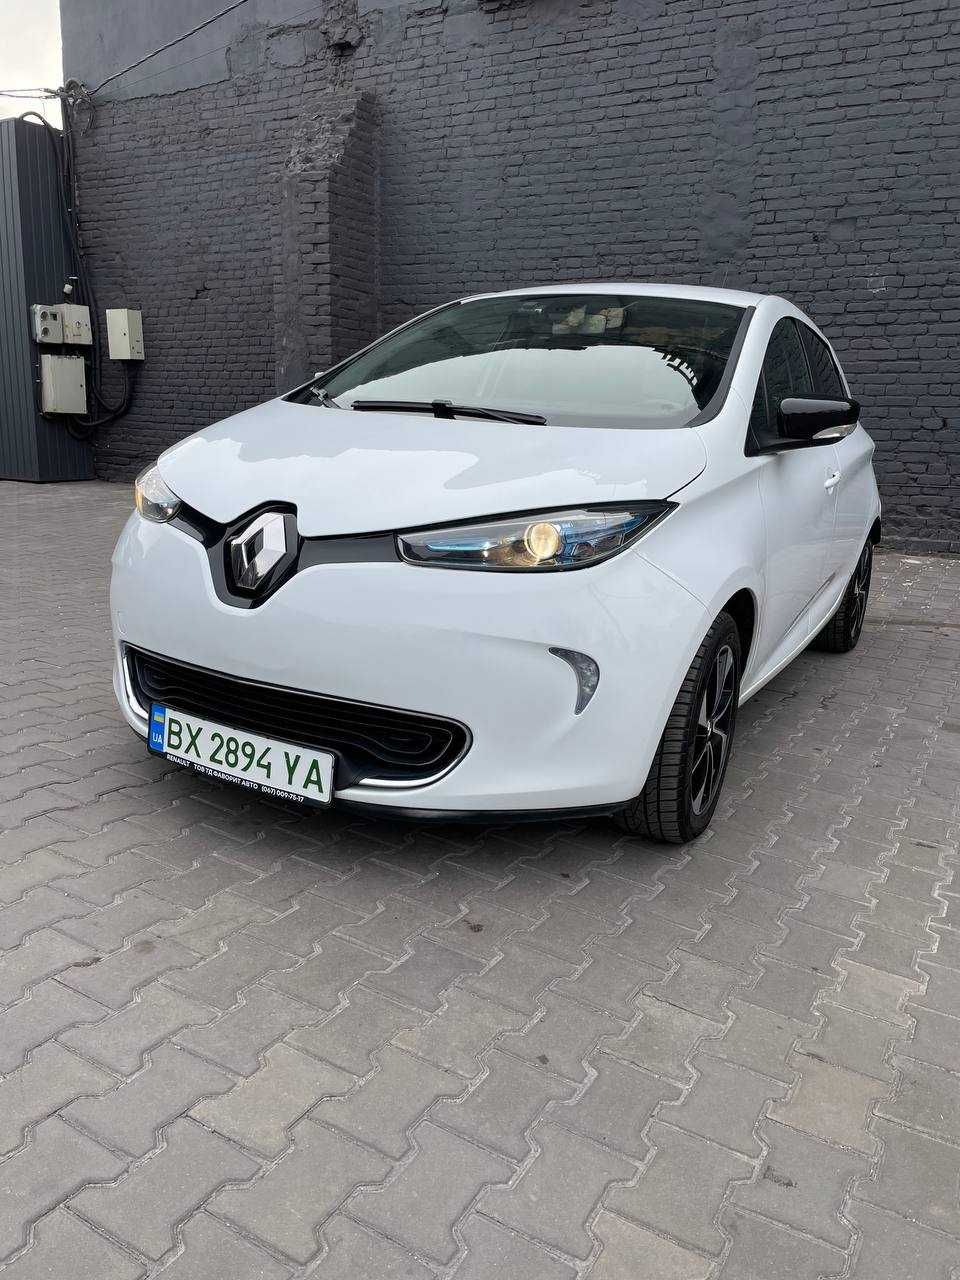 Продам Renault Zoe 2018р, Ємність акумулятора 41 кВт.г